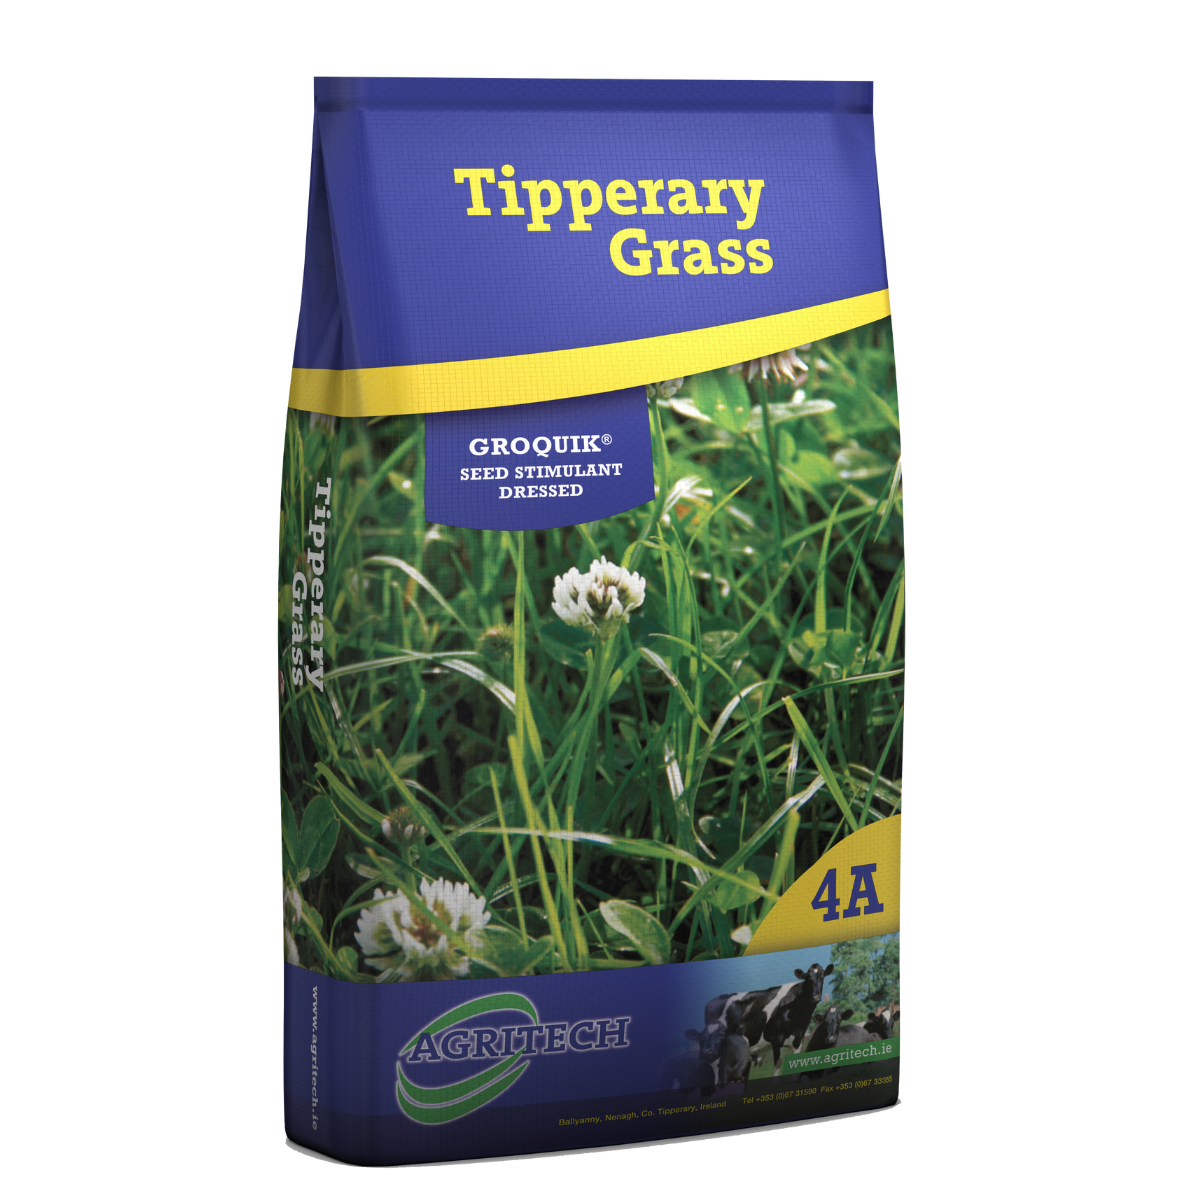 Tipperary Grass Packaging